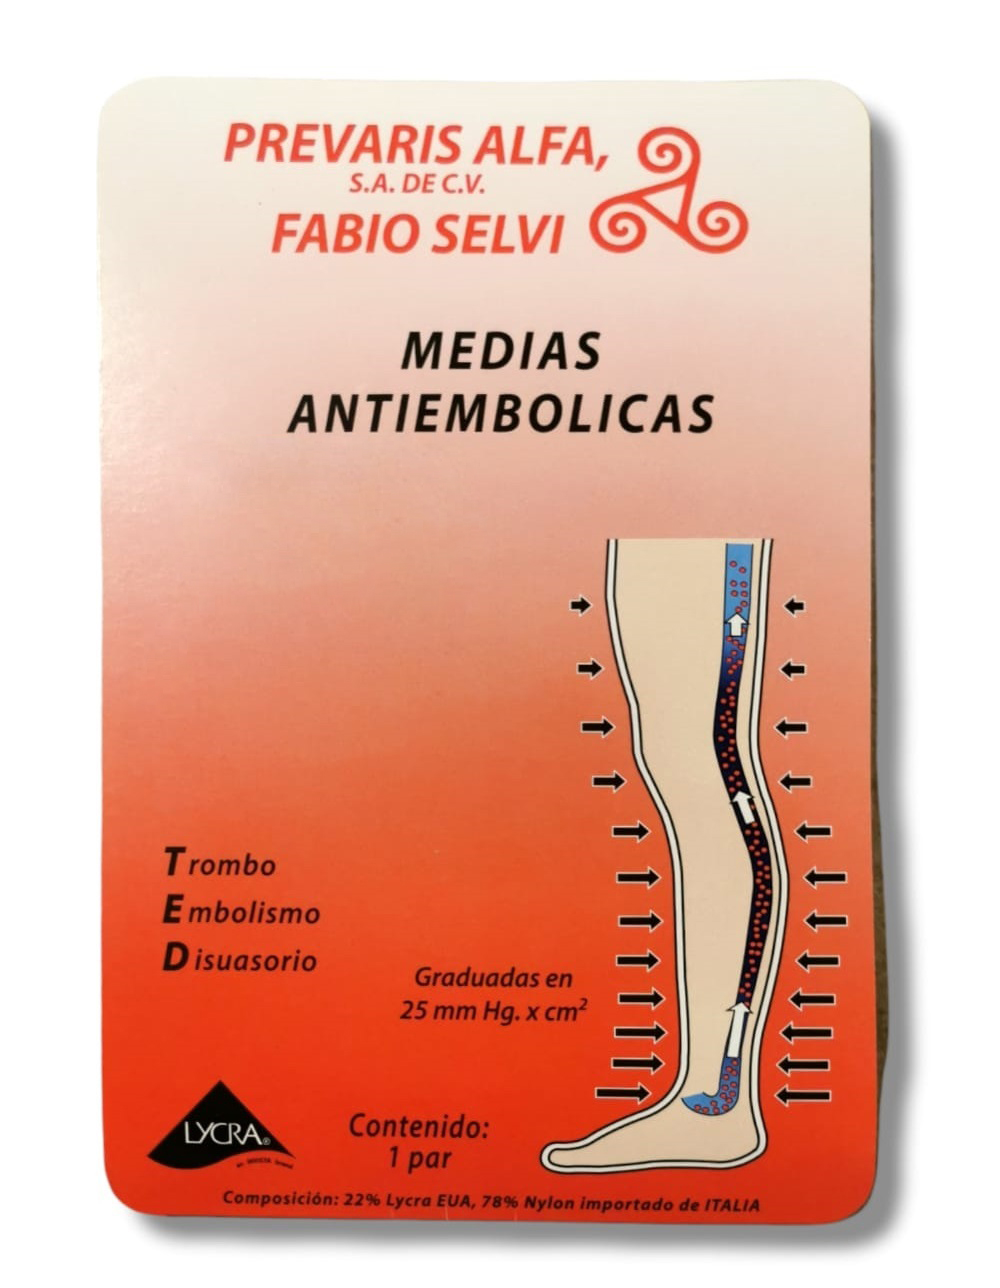 https://corseterialaconchita.mx/wp-content/uploads/2021/10/ML500-Medias-antiembolicas-Prevaris.jpg